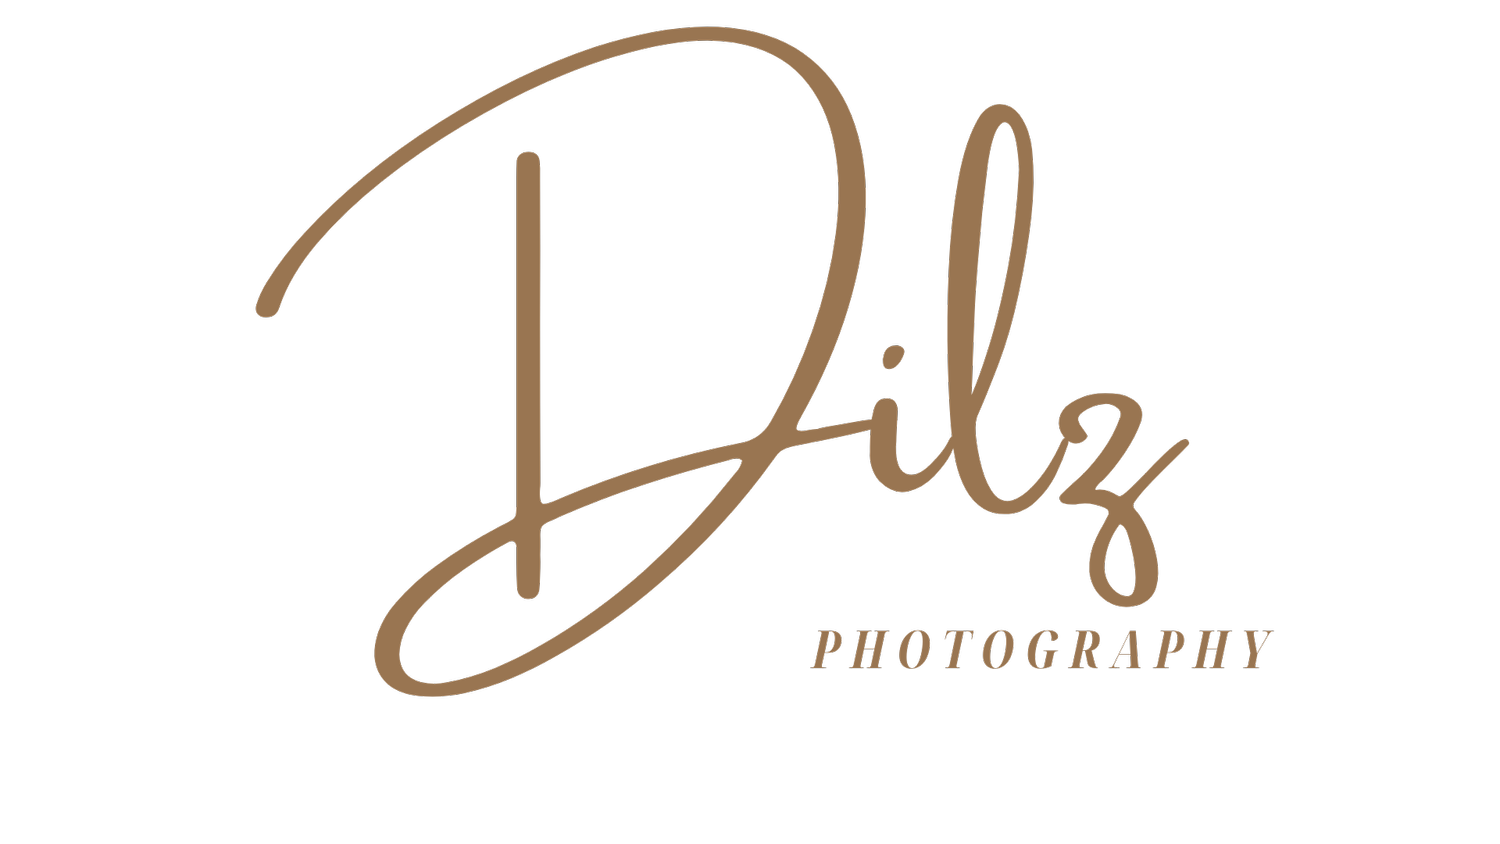 Dilz Photography